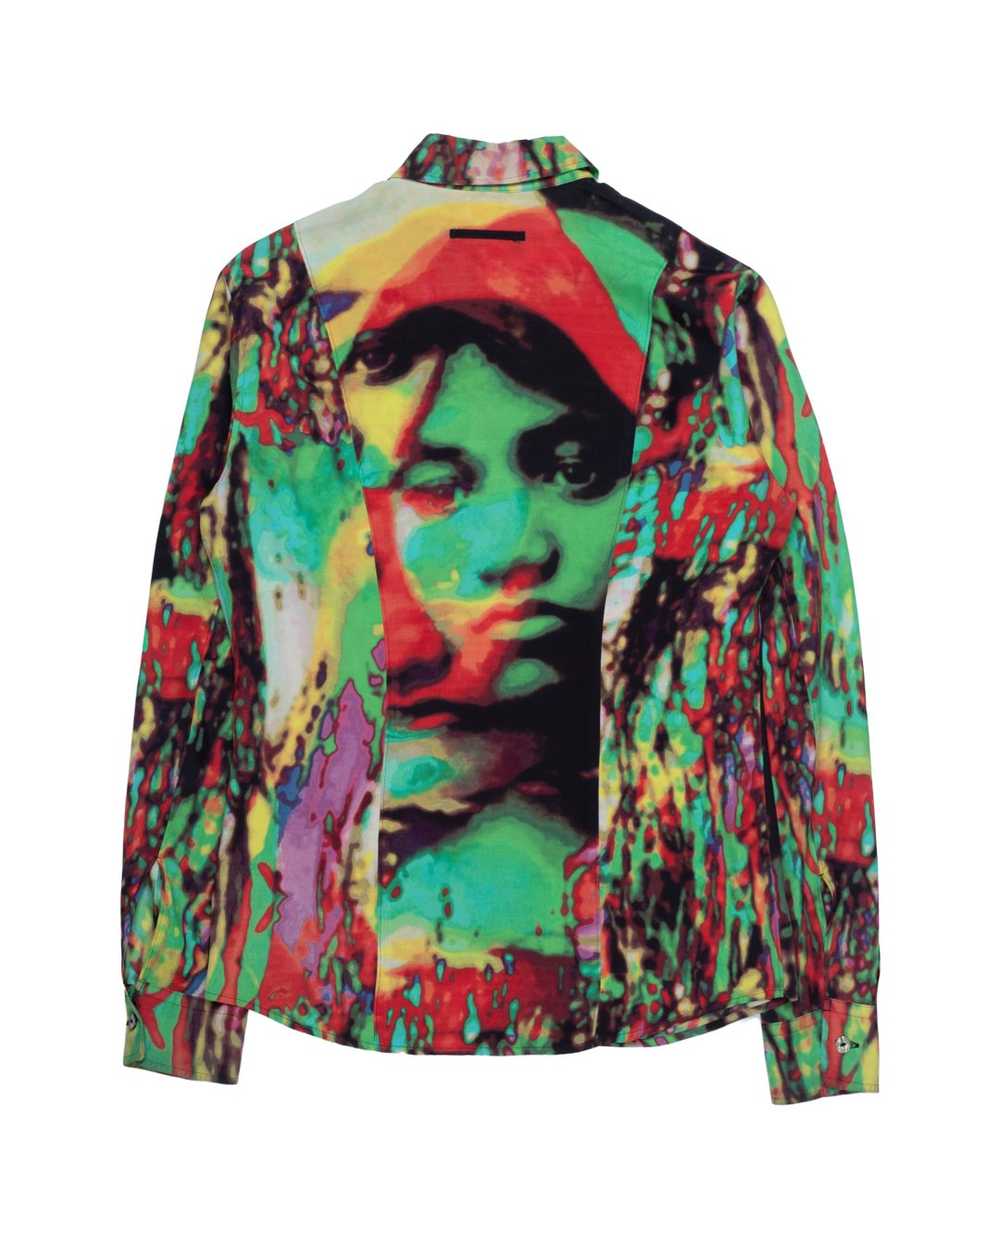 Jean Paul Gaultier SS2000 Psychodelic Shirt - image 2